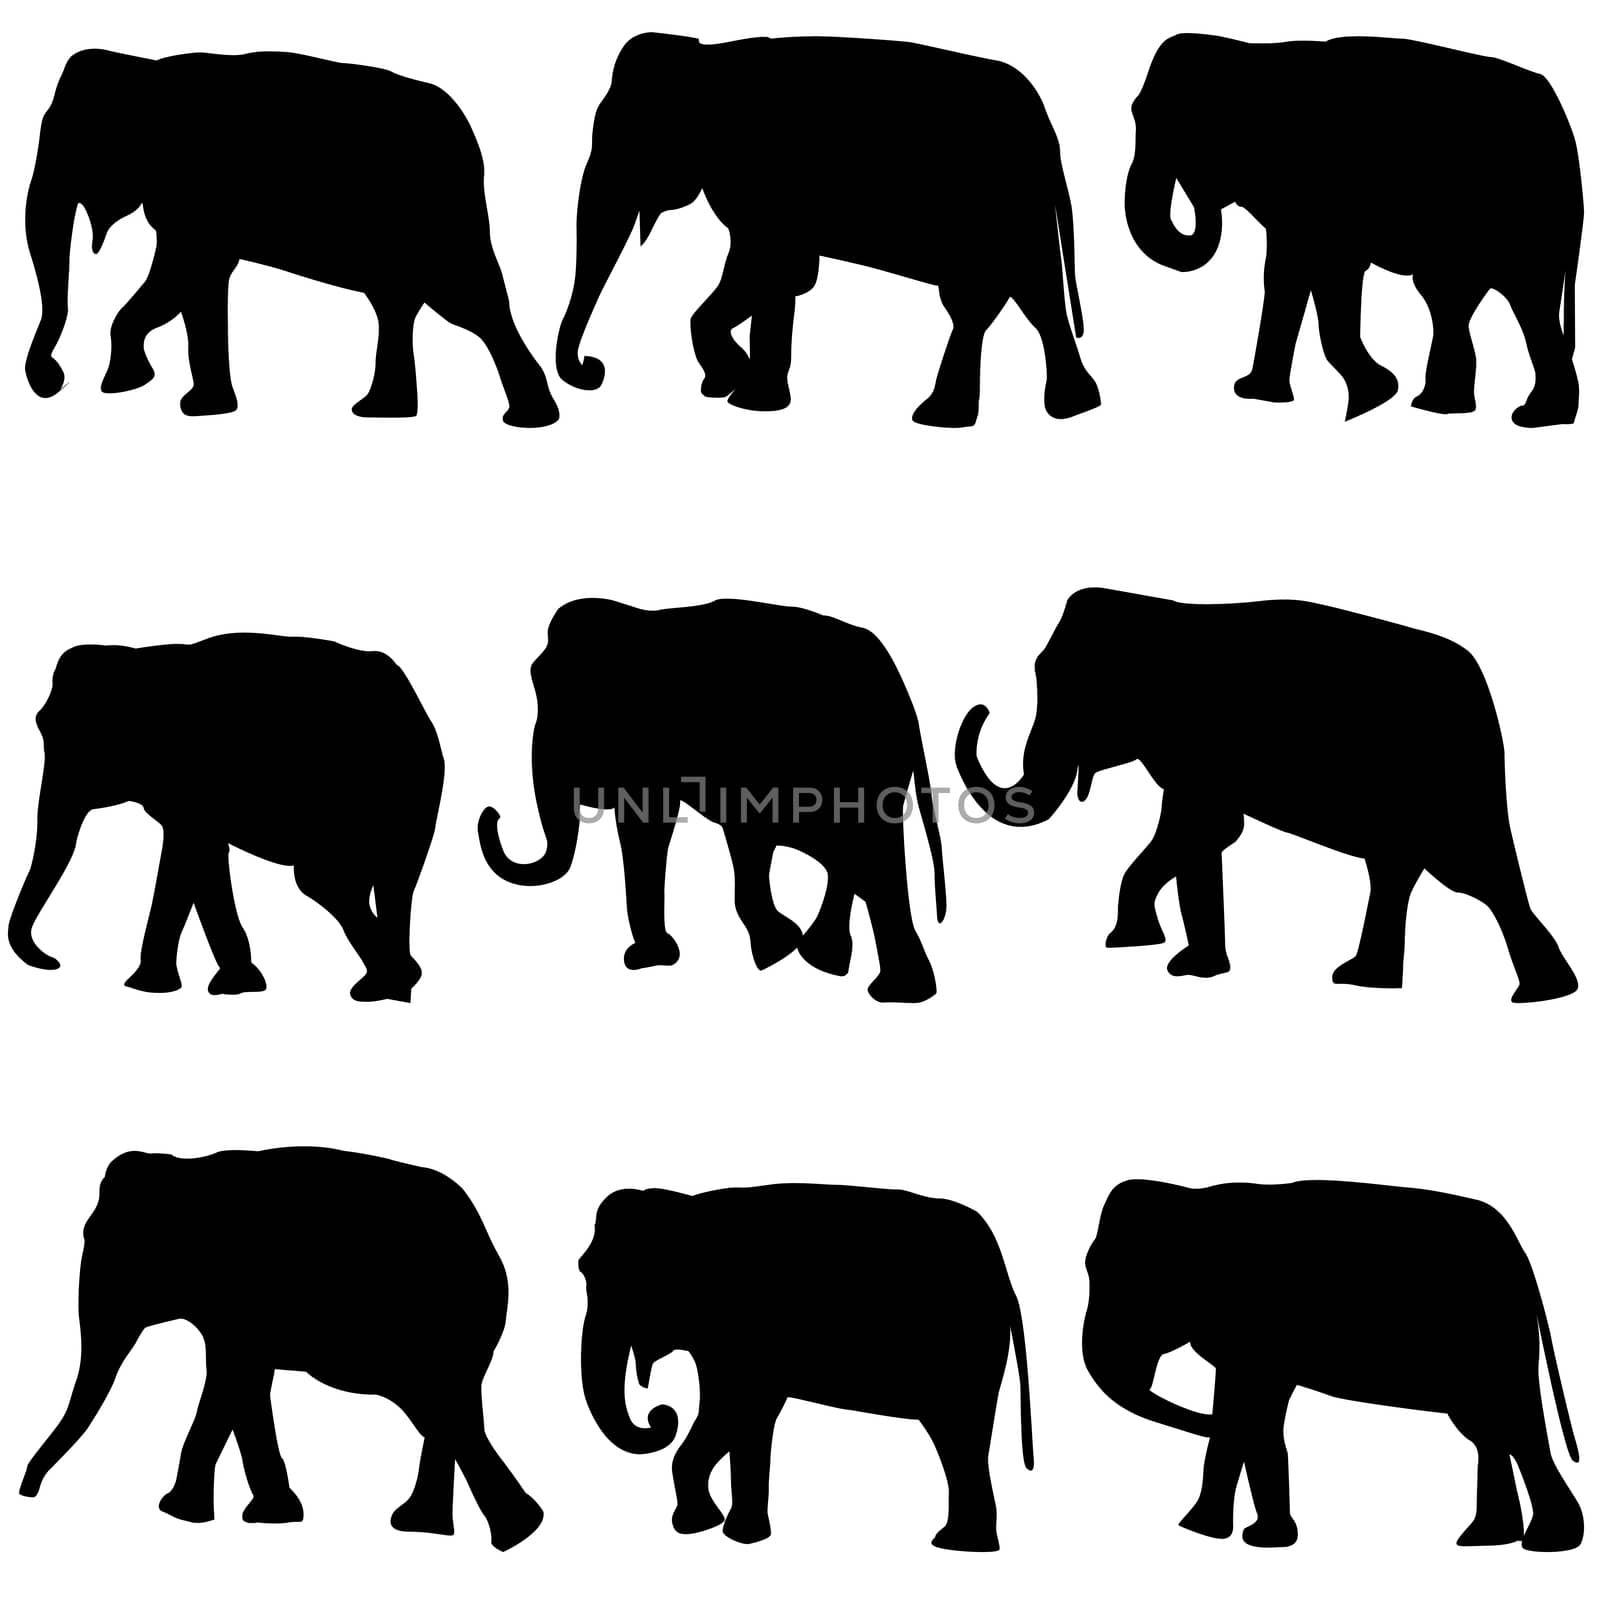 Set of black elelephants silhouettes